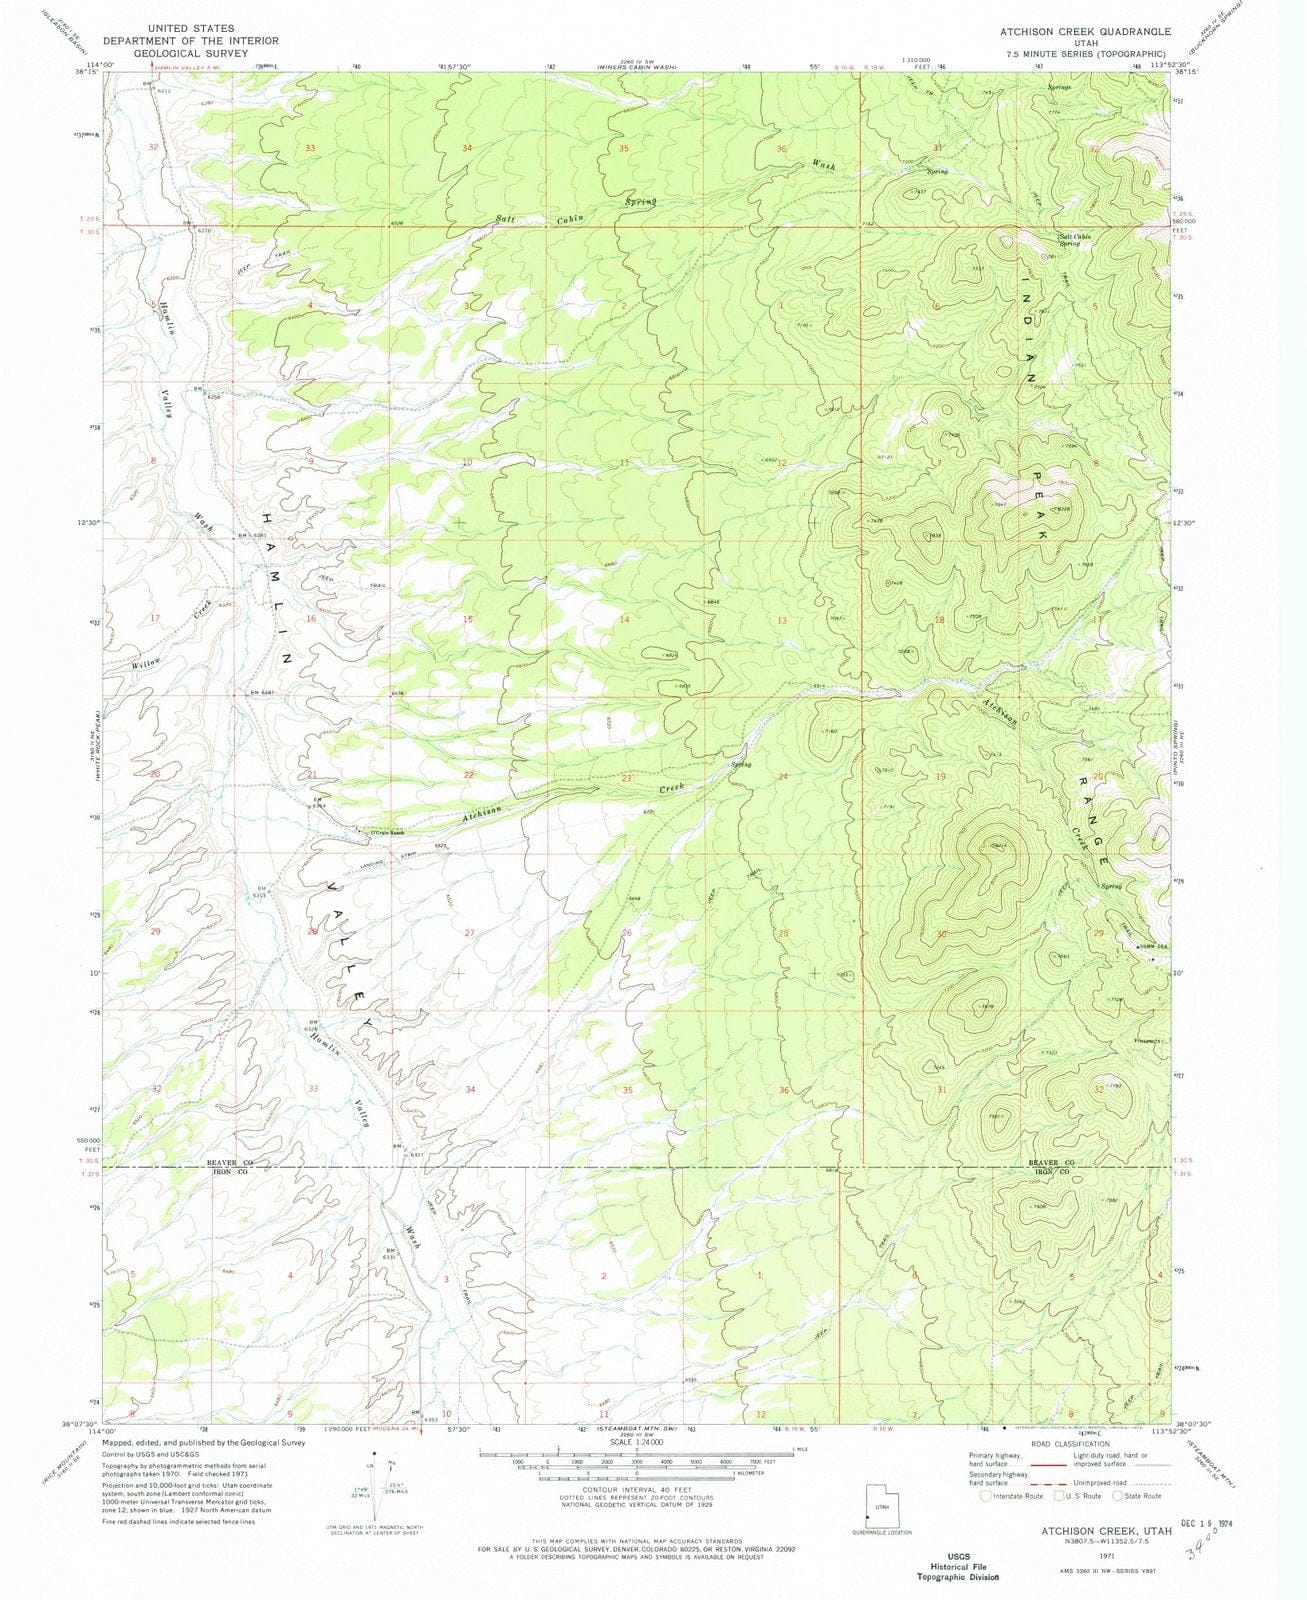 1971 Atchison Creek, UT - Utah - USGS Topographic Map